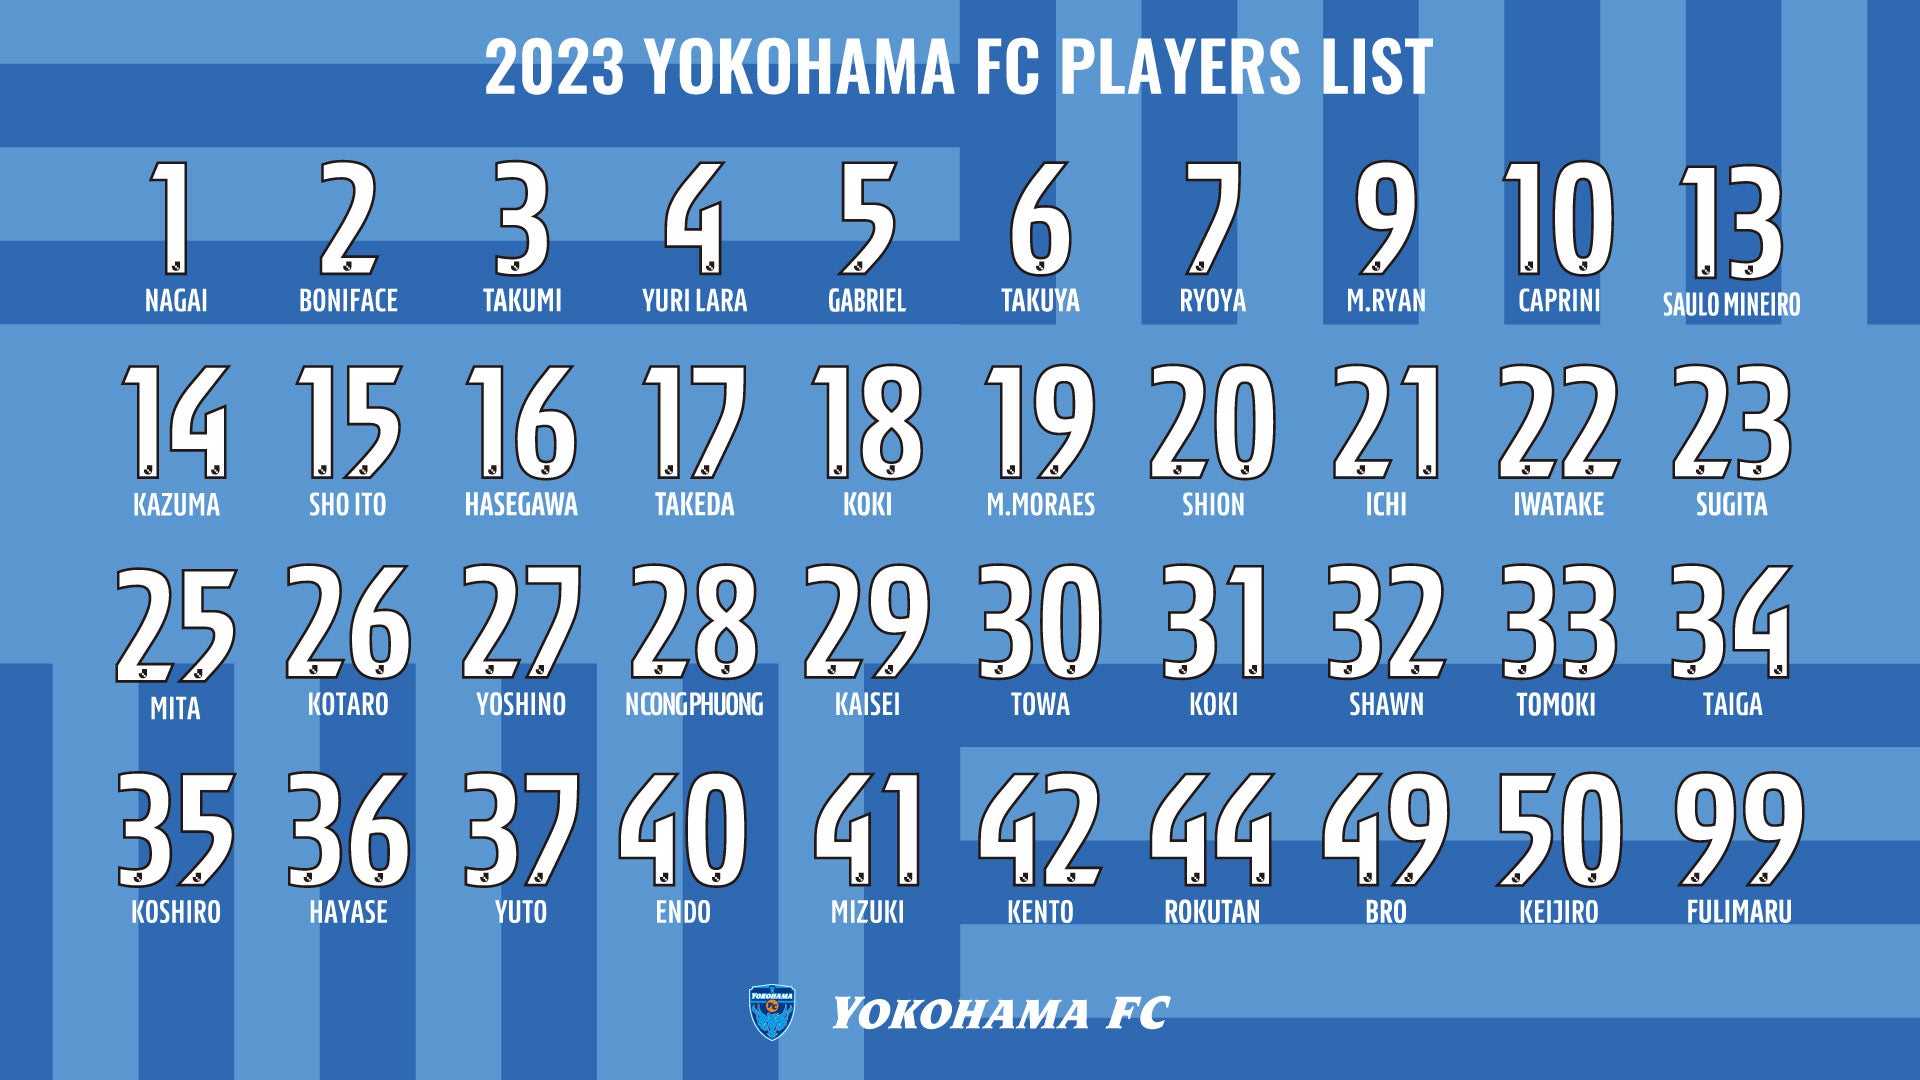 2023 YOKOHAMAFC UNIFORM | 横浜FC・公式オンラインストア